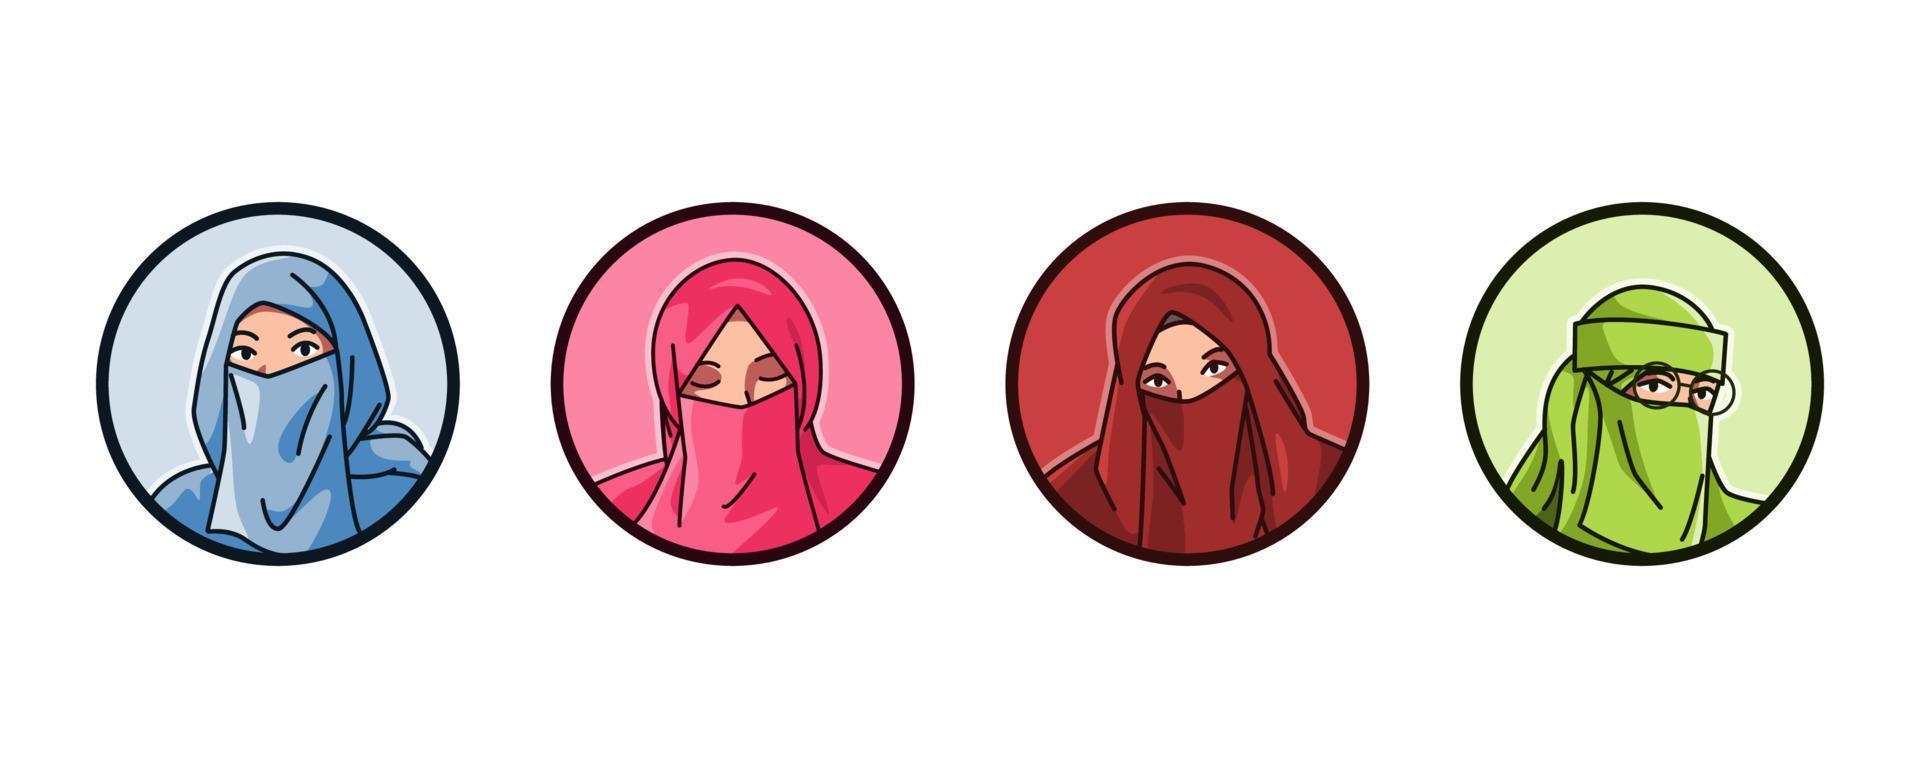 conjunto avatar de un hembra caracteres vestir niqab. islámico velo, Pañuelo. redondo, circulo icono para social medios de comunicación, usuario perfil, sitio web, aplicación línea dibujos animados estilo. vector ilustración.